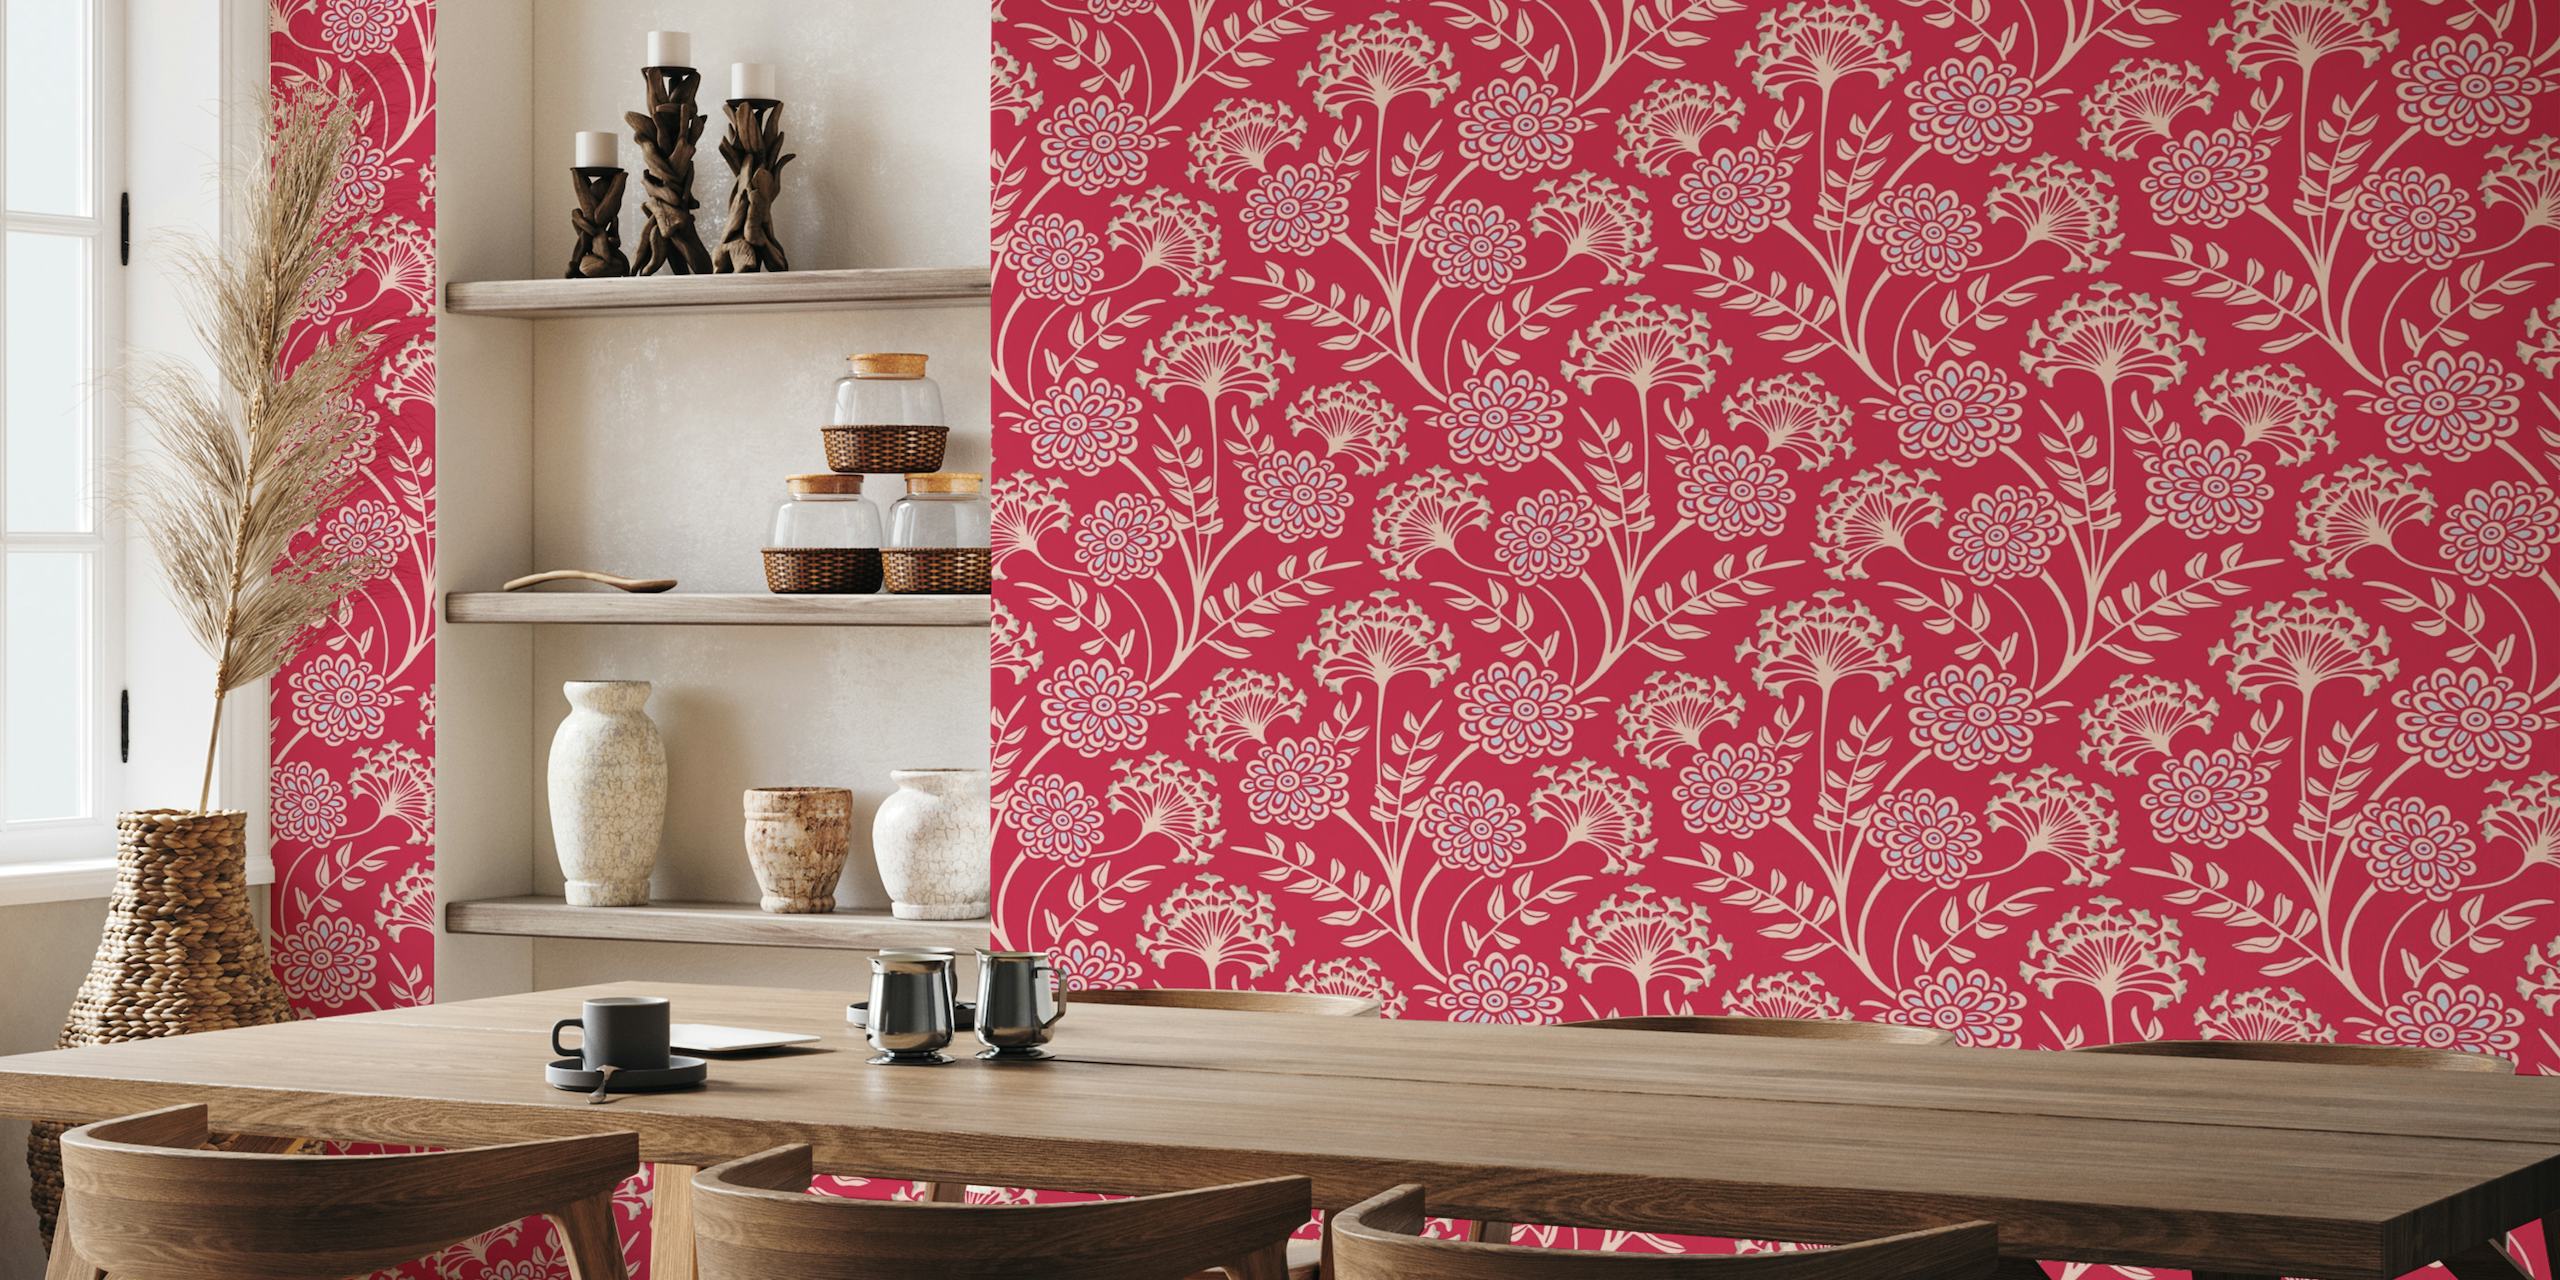 DANUBE Cottage Floral - Magenta Red - Large papel pintado